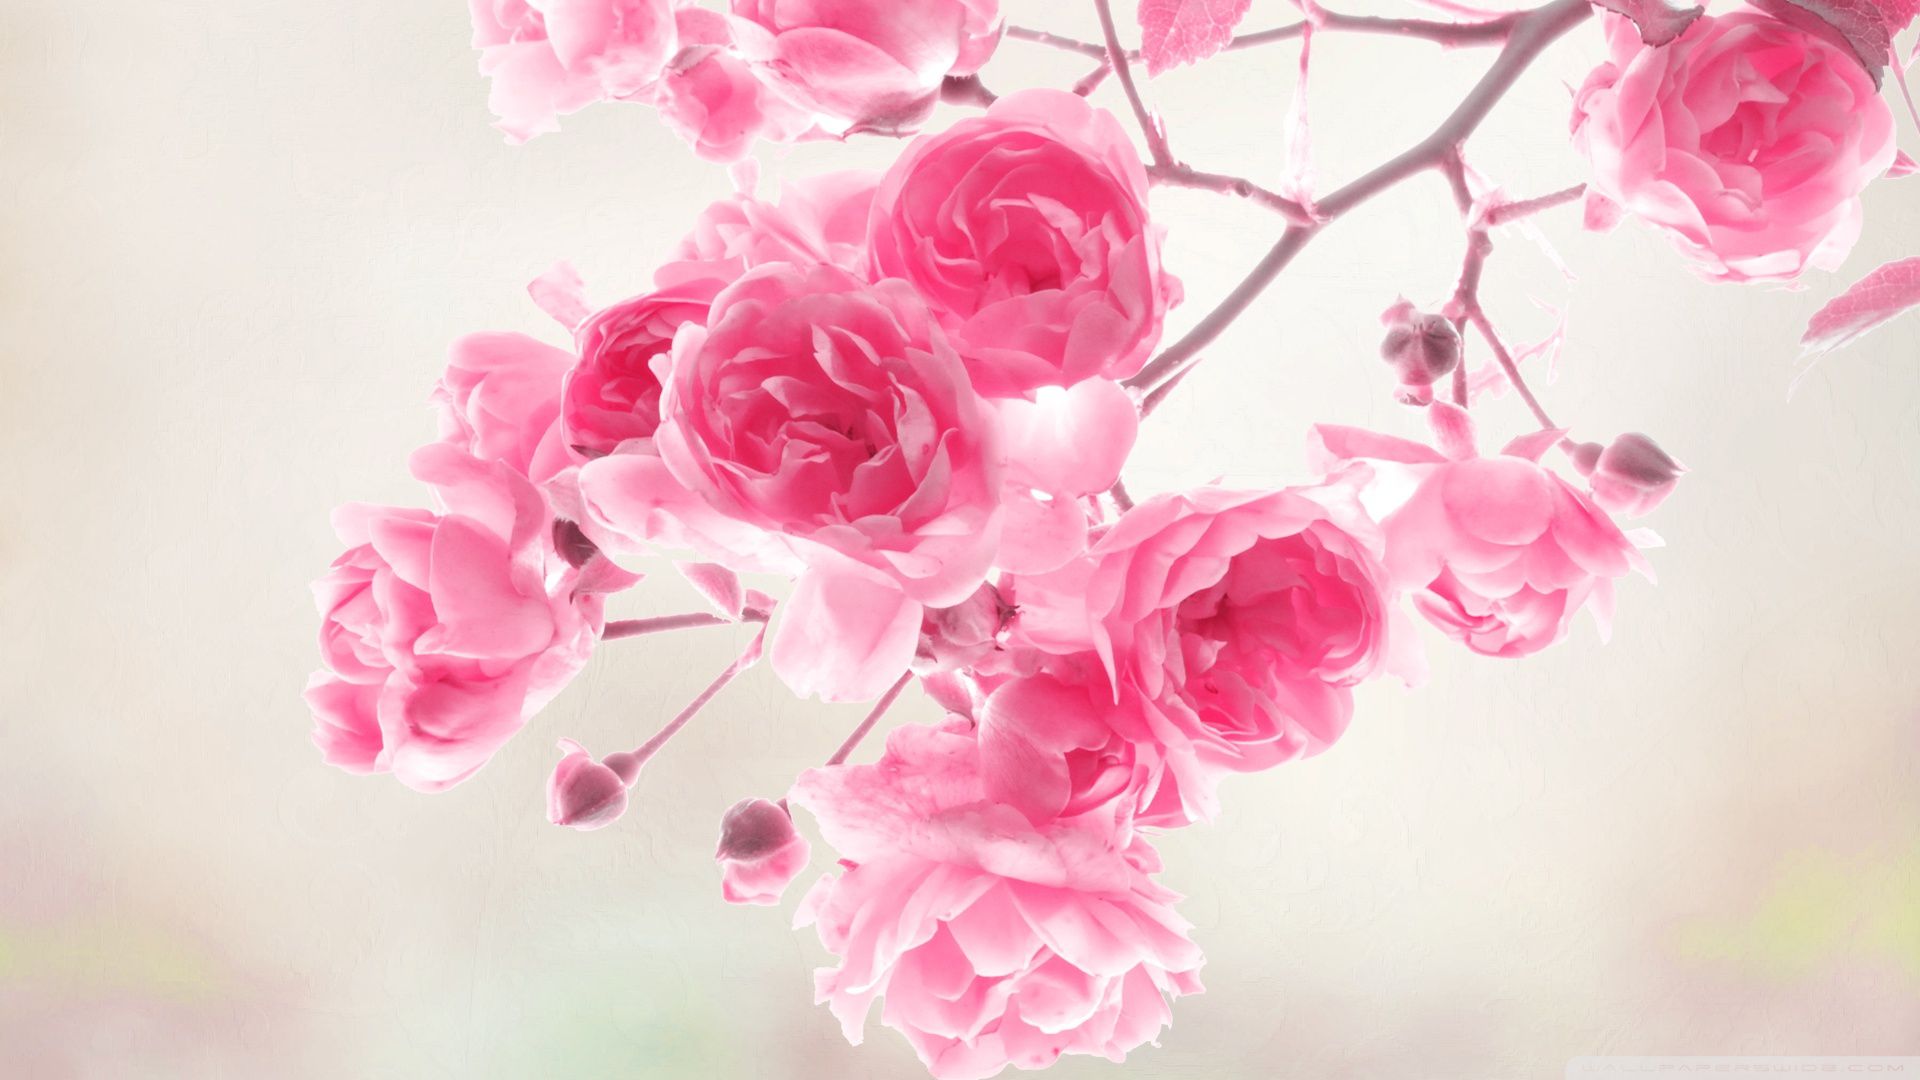 Pink Roses Desktop Wallpaper - Wallpaper, High Definition, High Quality